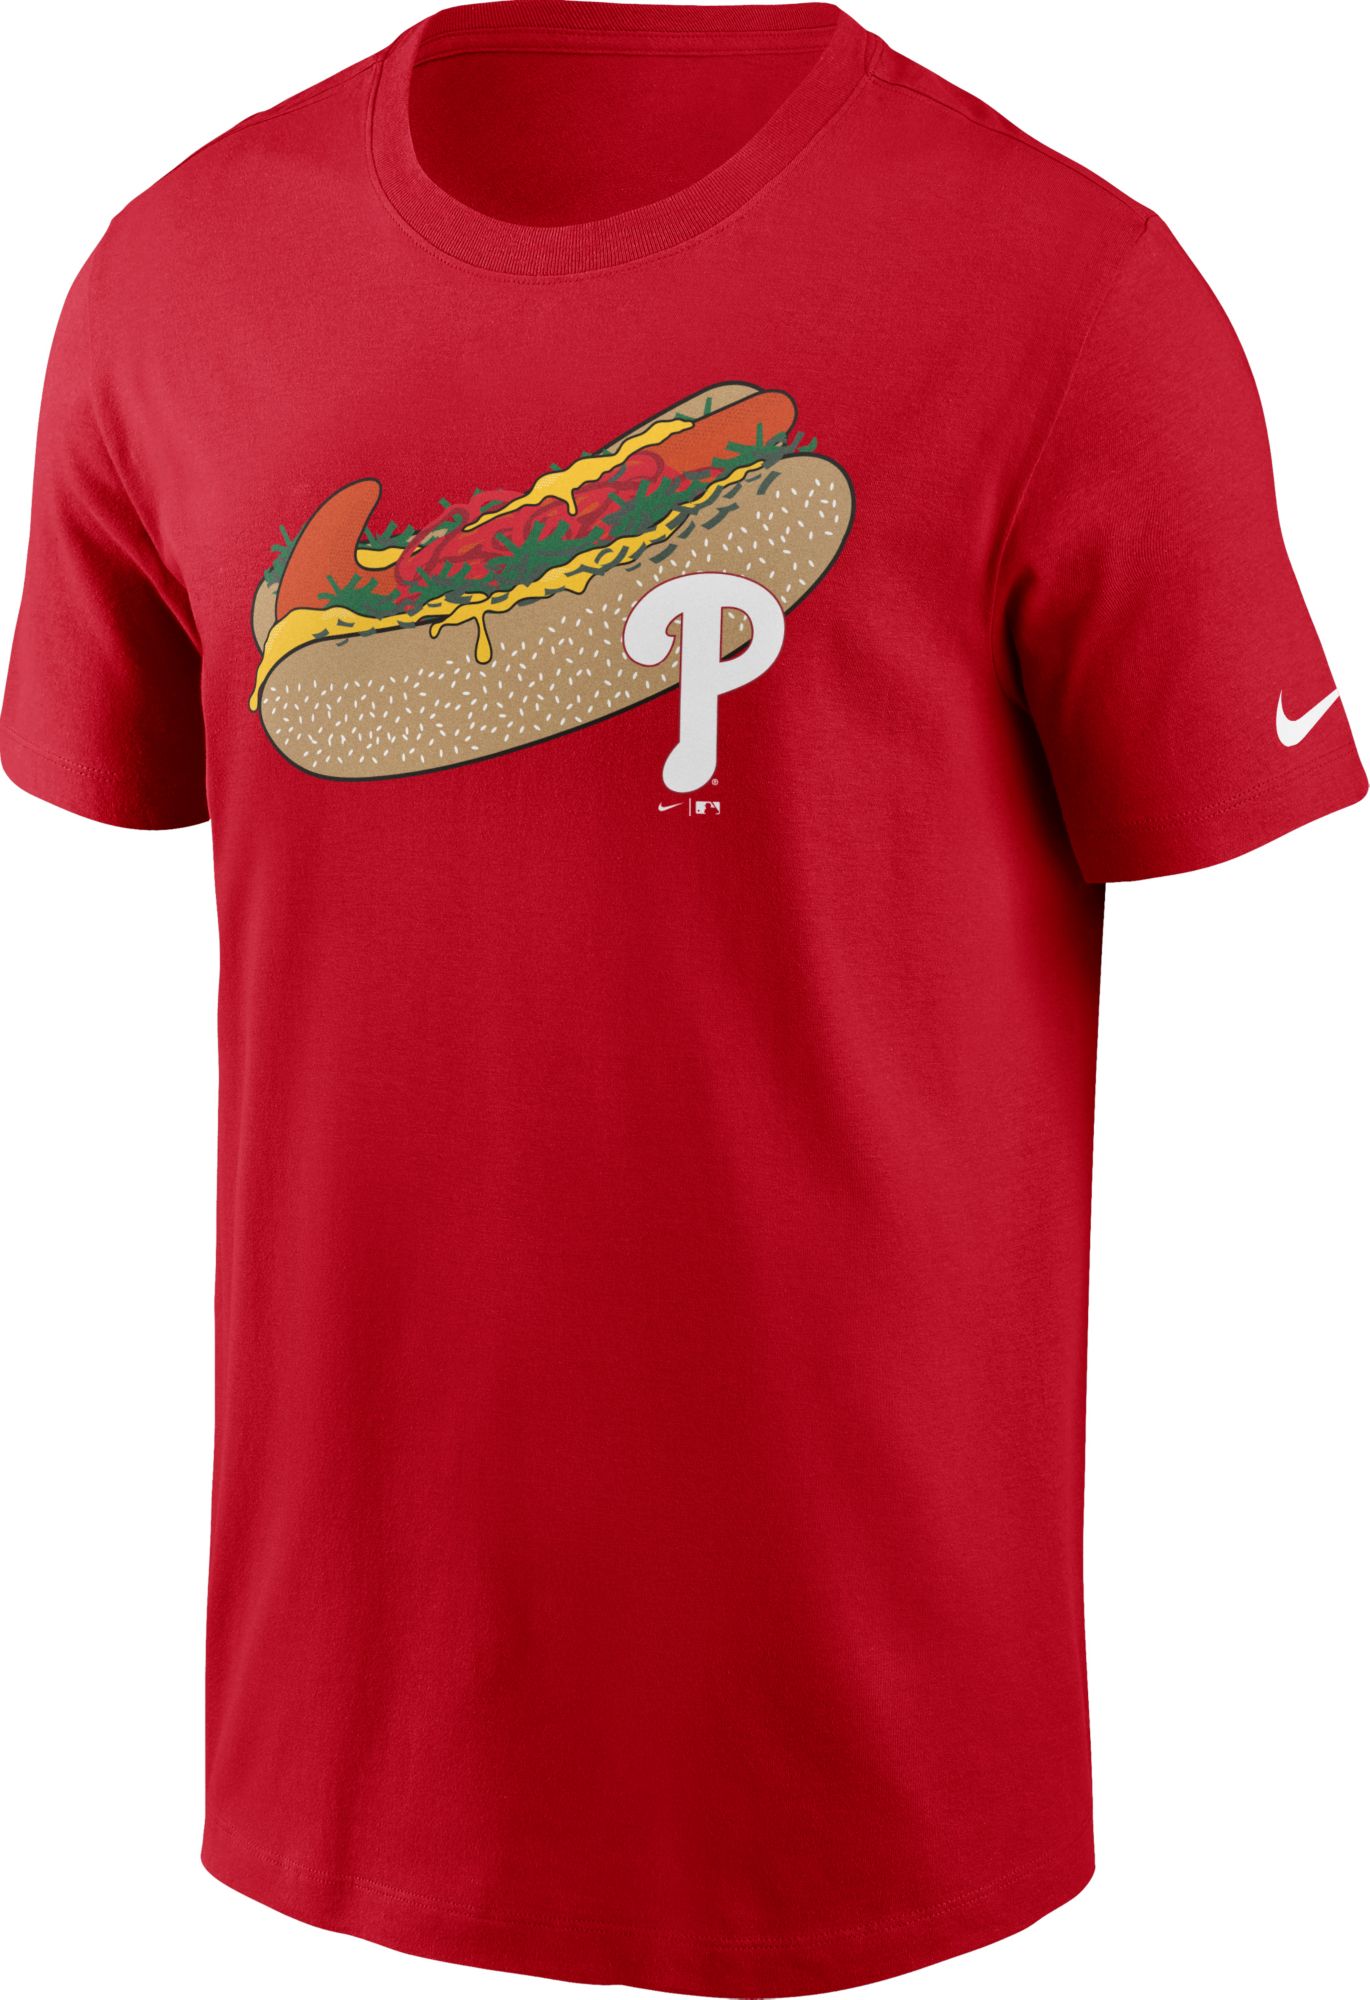 Men's Philadelphia Phillies Red Local Dog T-Shirt